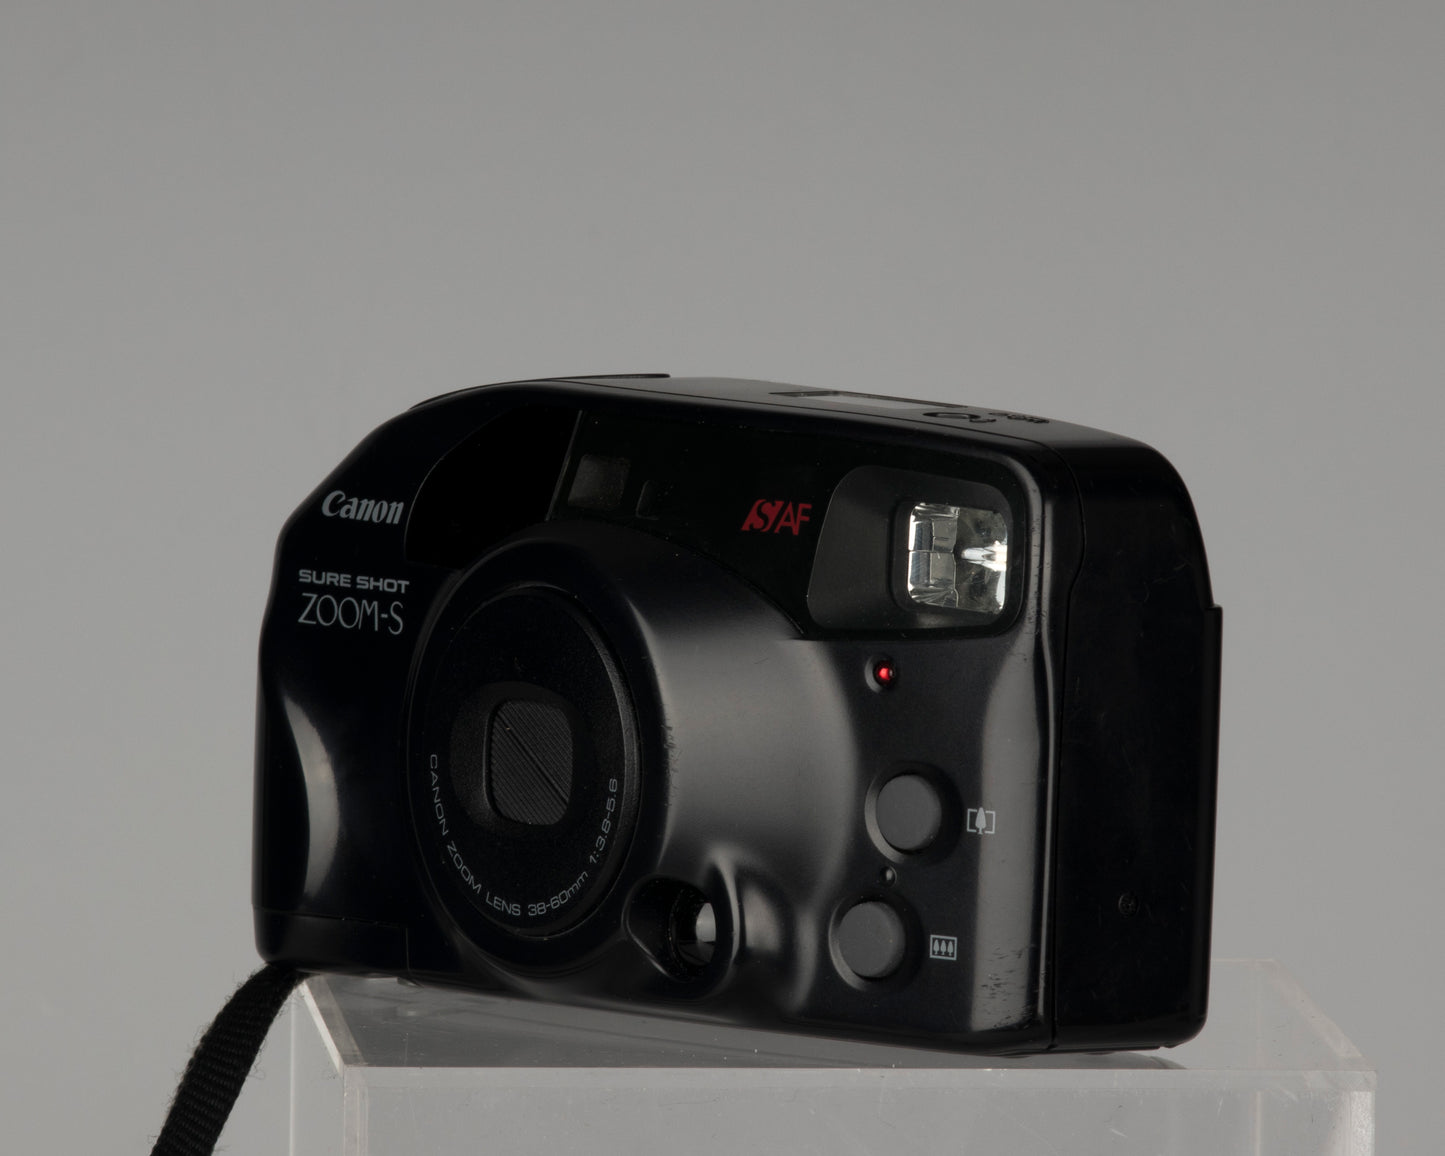 Canon Sure Shot Zoom S 35mm camera